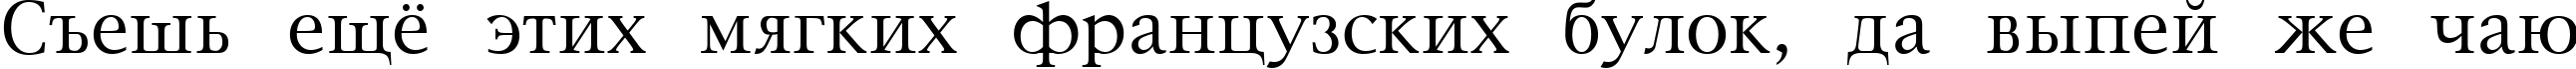 Пример написания шрифтом New York Plain:001.003 текста на русском